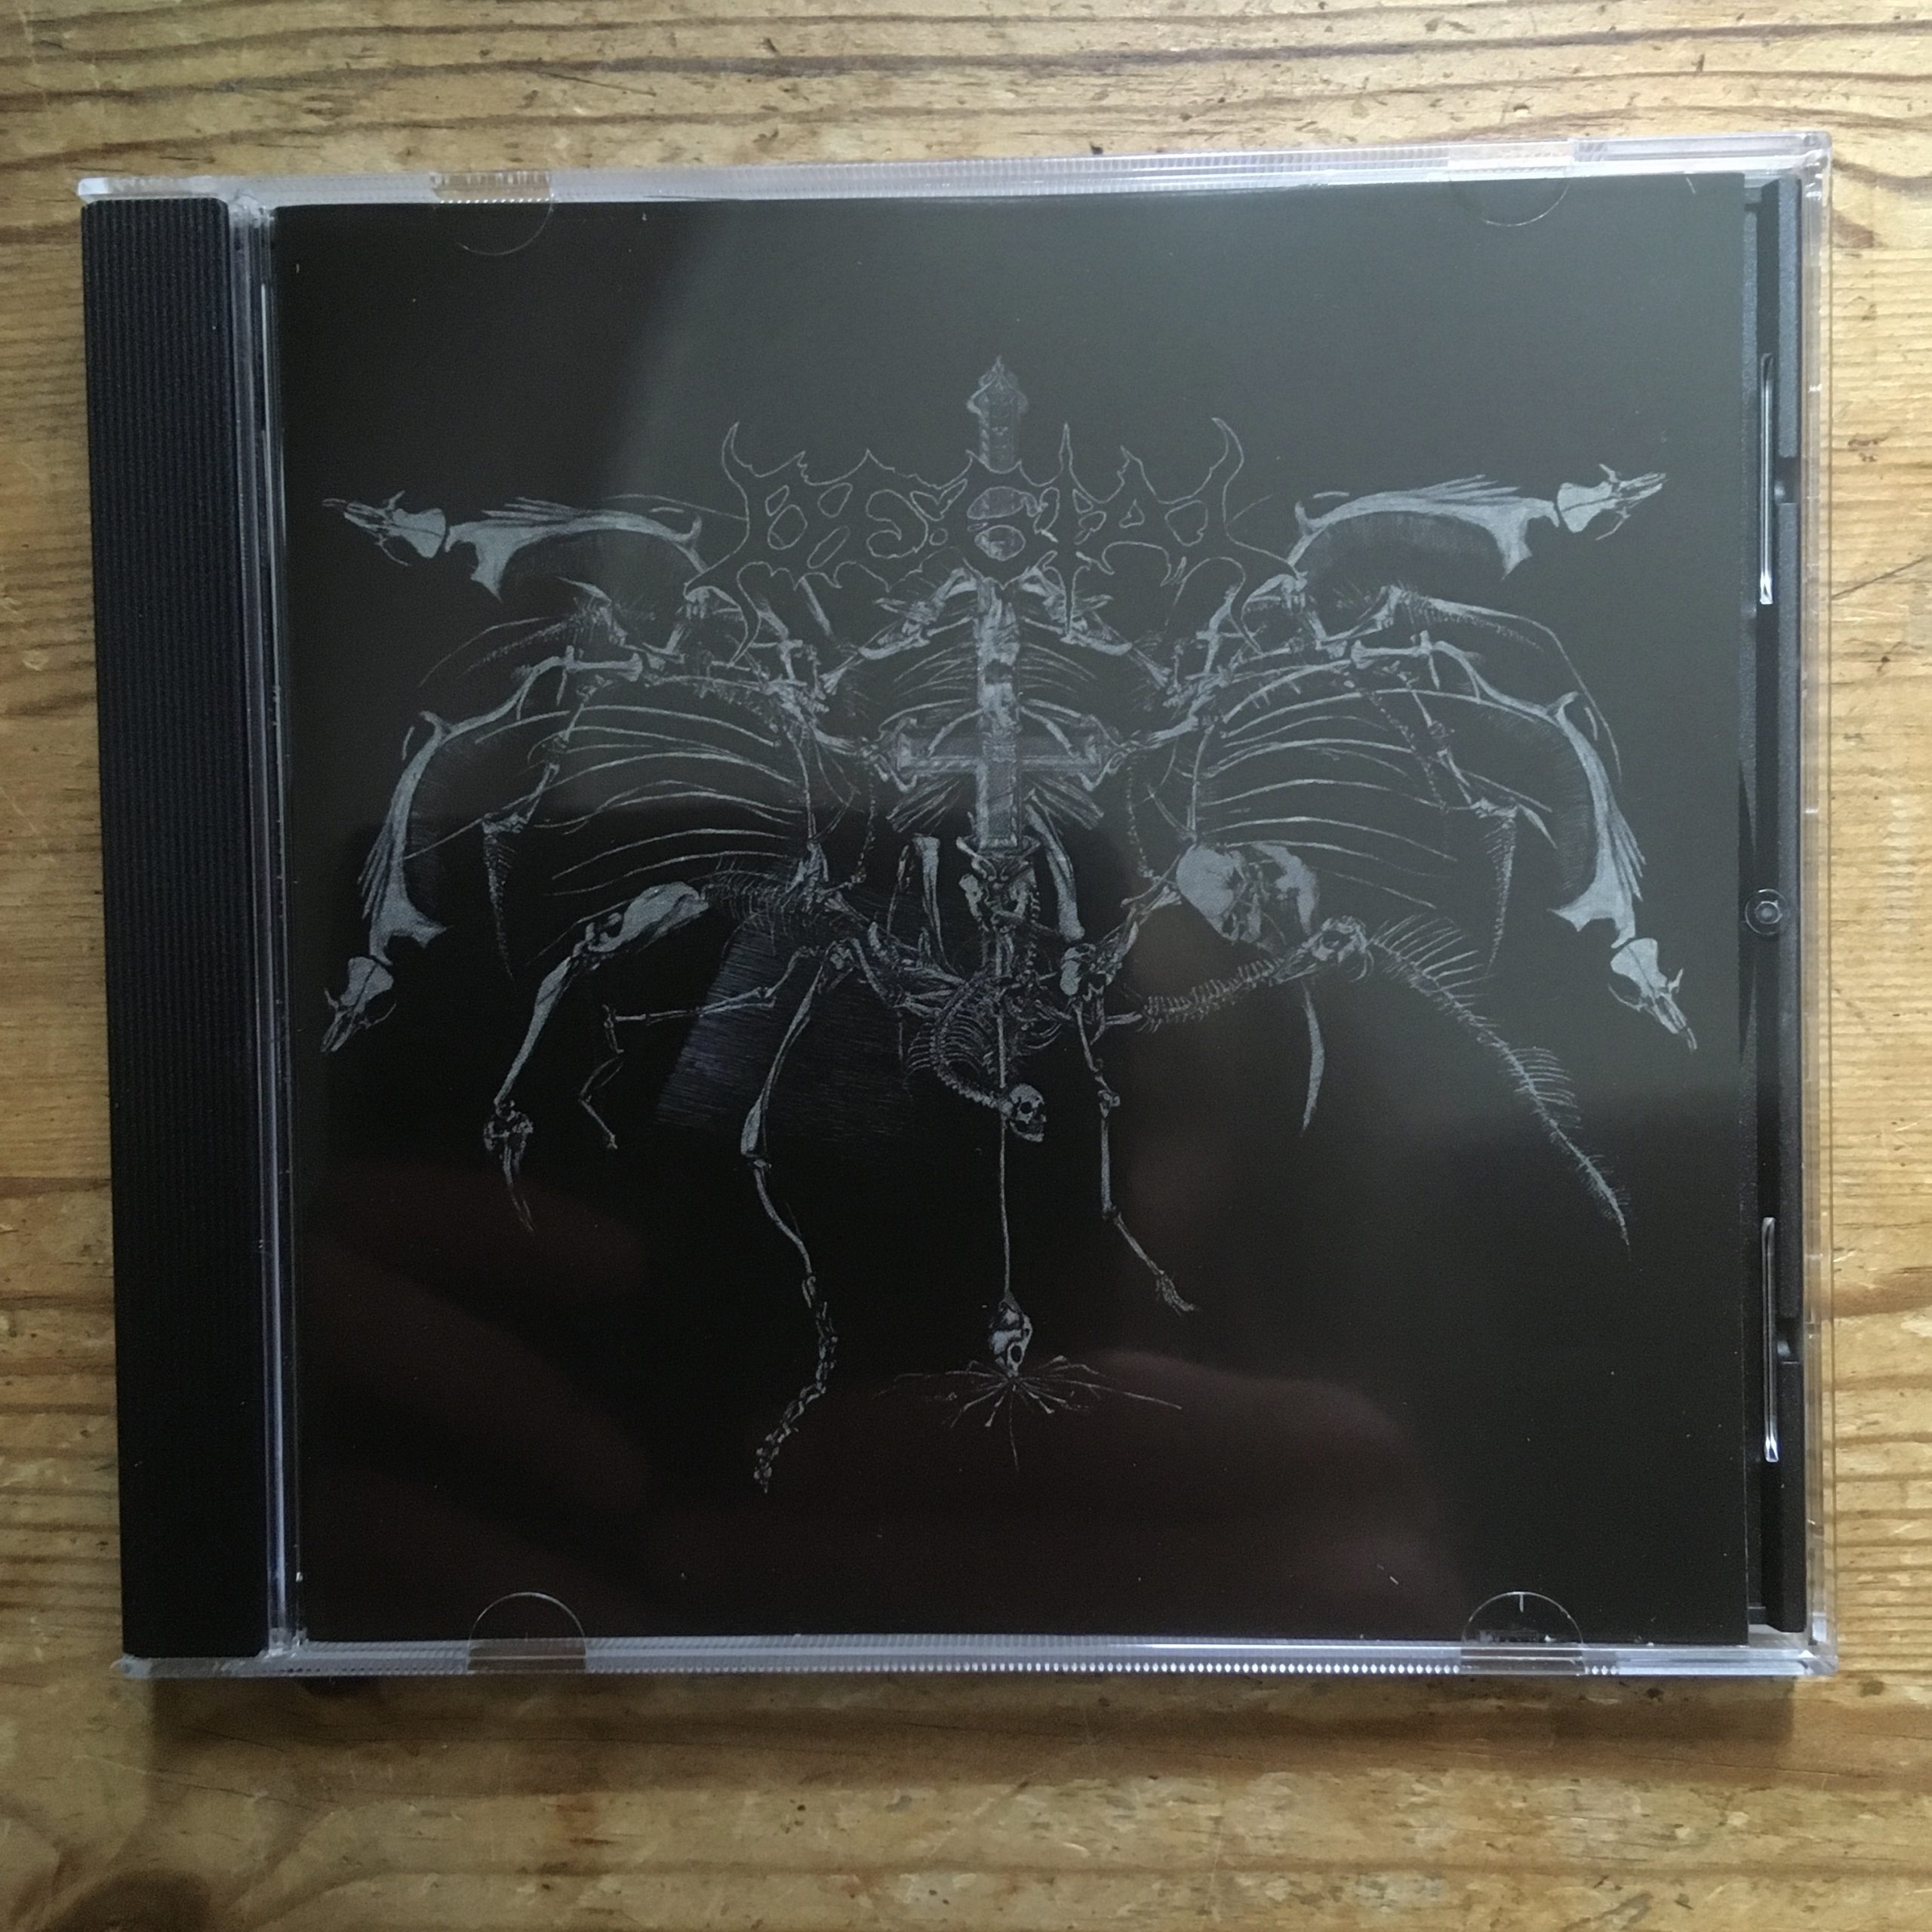 Photo of the Degial - "Death's Striking Wings" CD